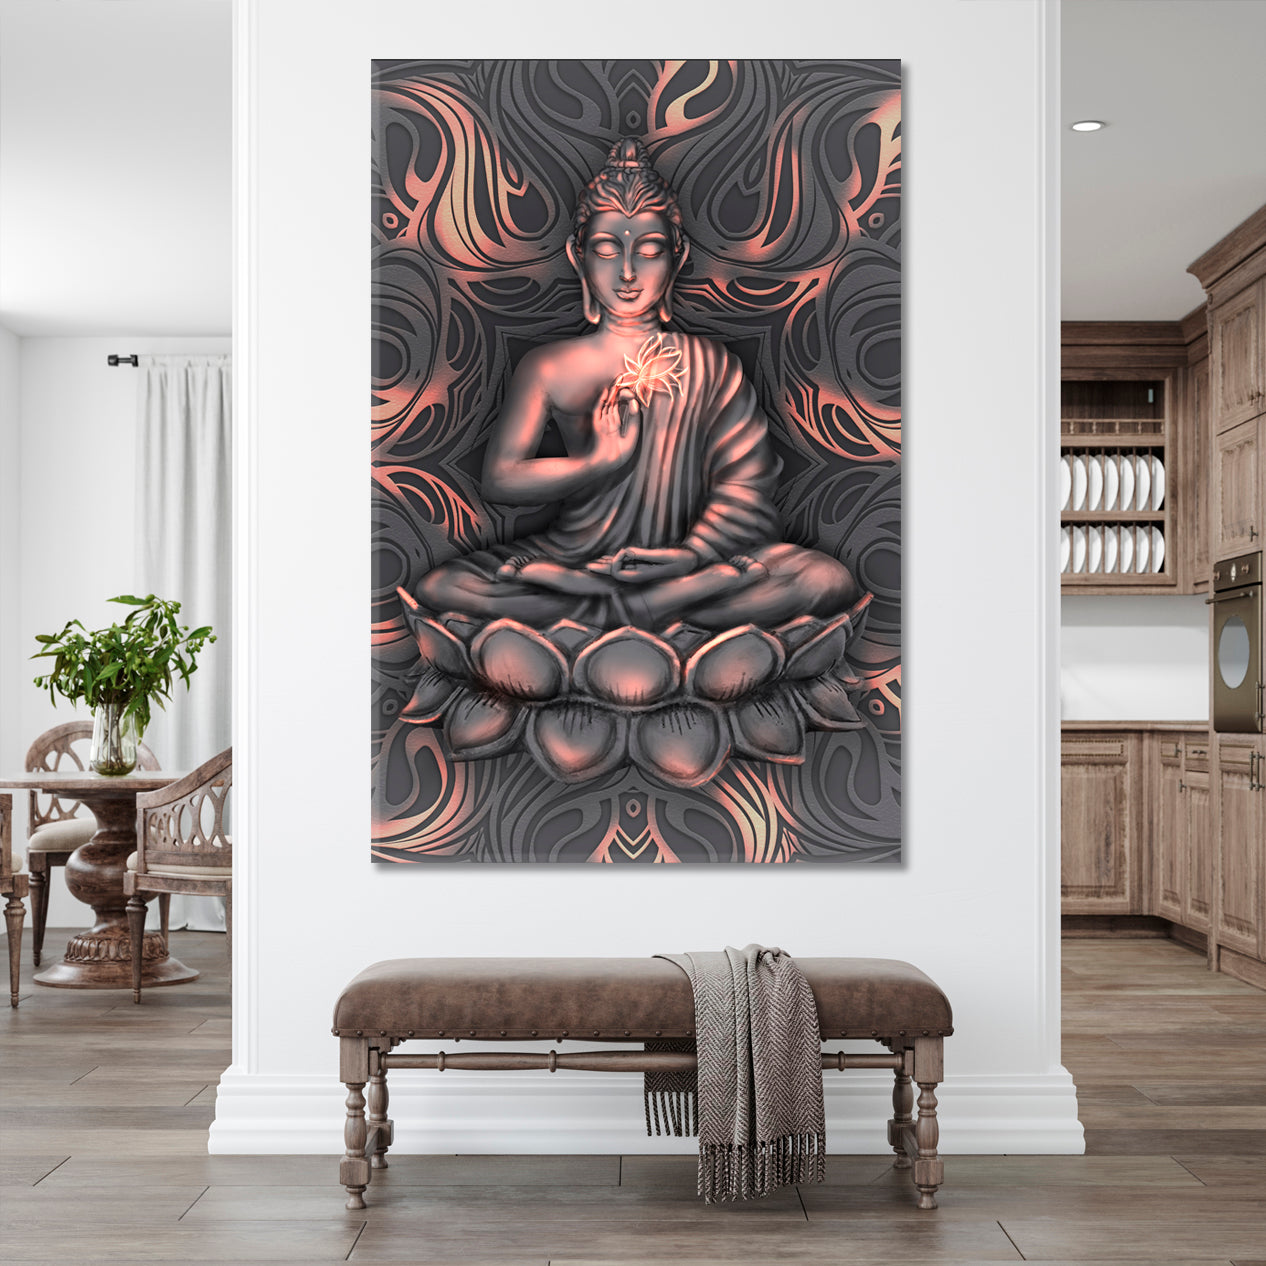 Shining Buddha Lotus Pose Stylized Mandala Painting Religious Modern Art Artesty 1 Panel 16"x24" 